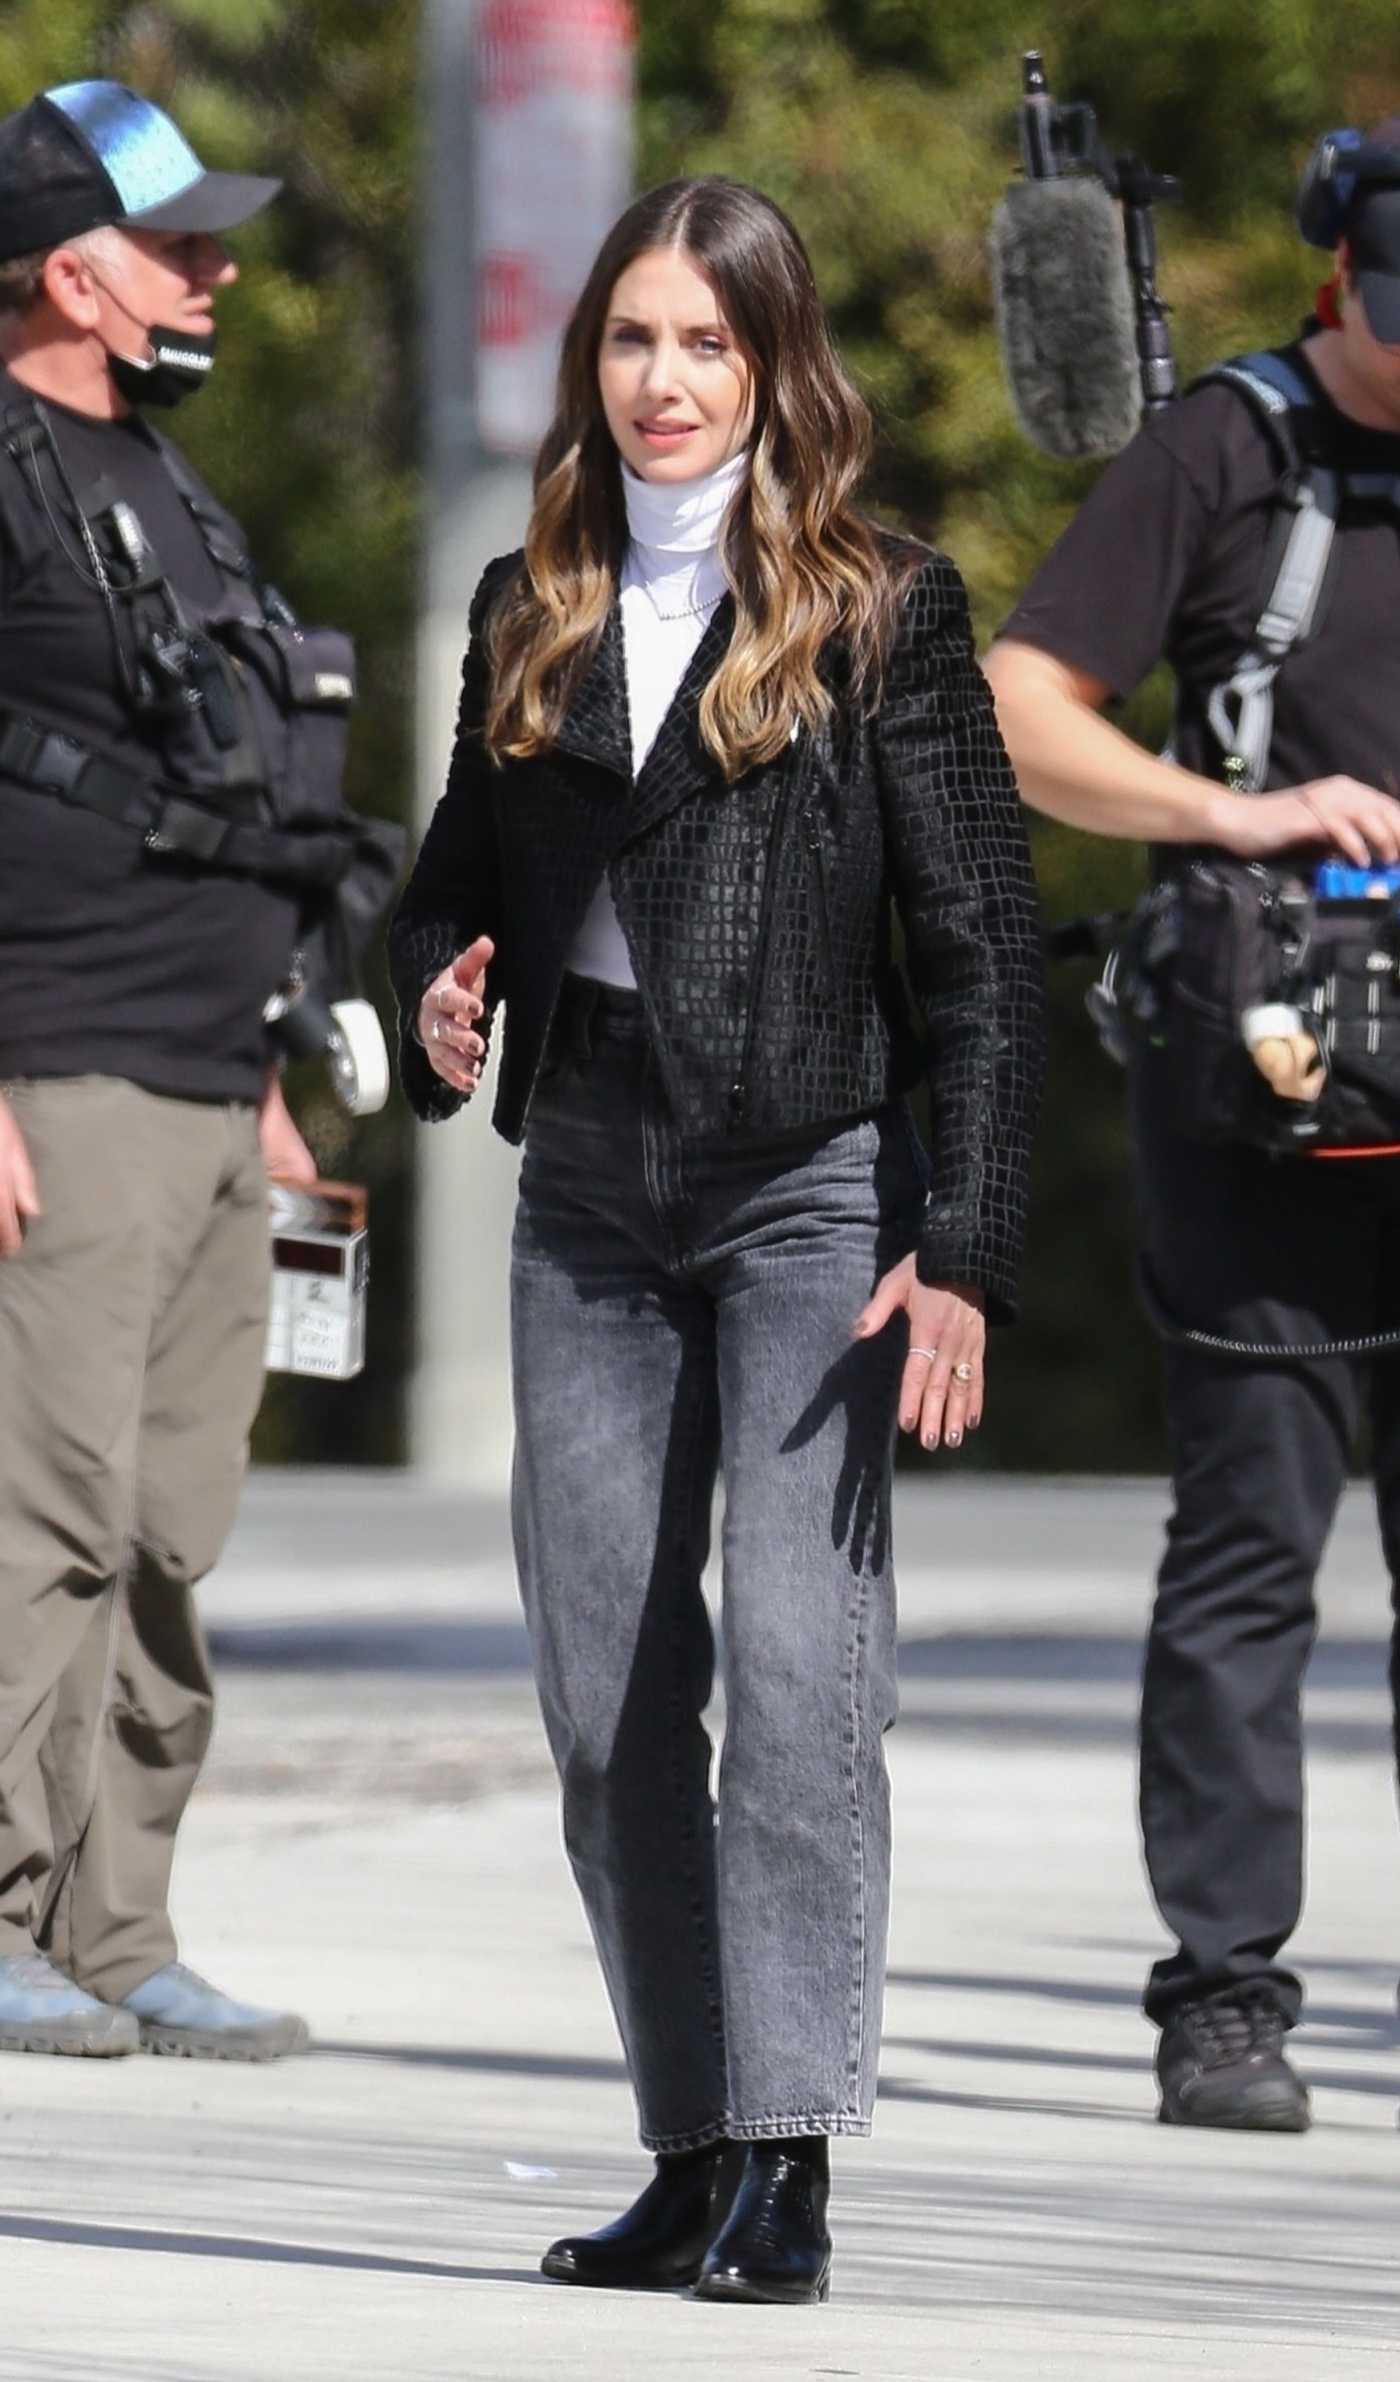 Alison Brie in a Black Jacket Films a Skit for Carpool Karaoke in Los Angeles 02/03/2023